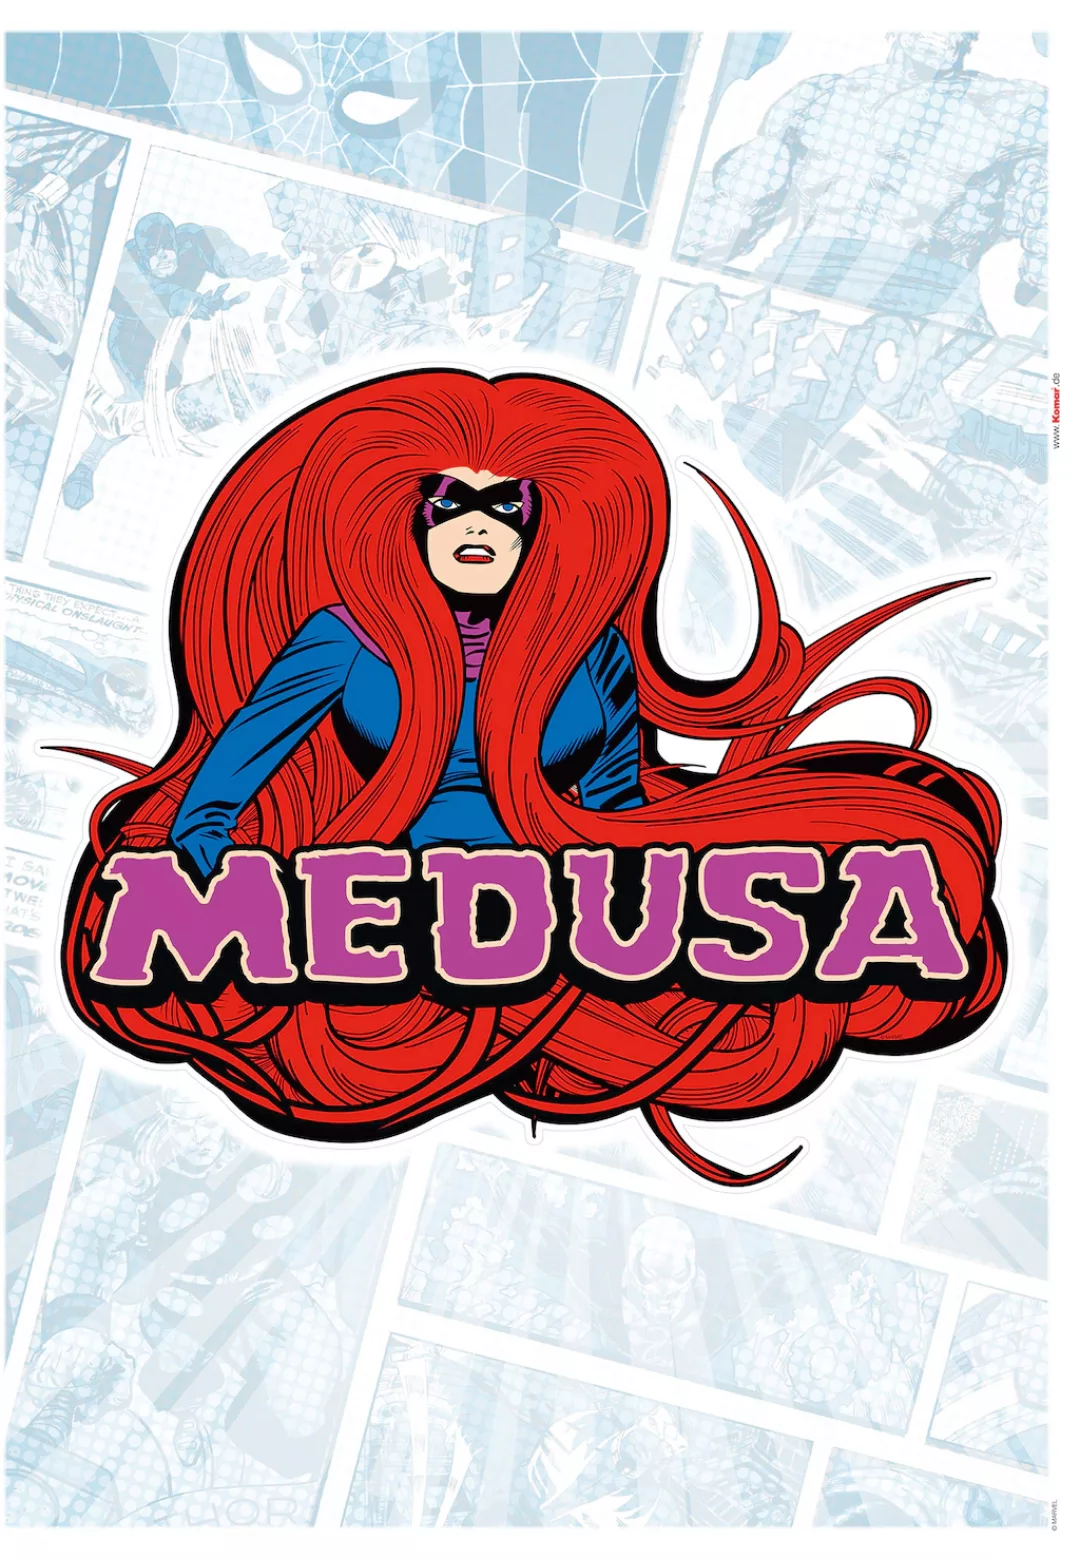 KOMAR Wandtattoo - Medusa Comic Classic  - Größe 50 x 70 cm mehrfarbig Gr. günstig online kaufen